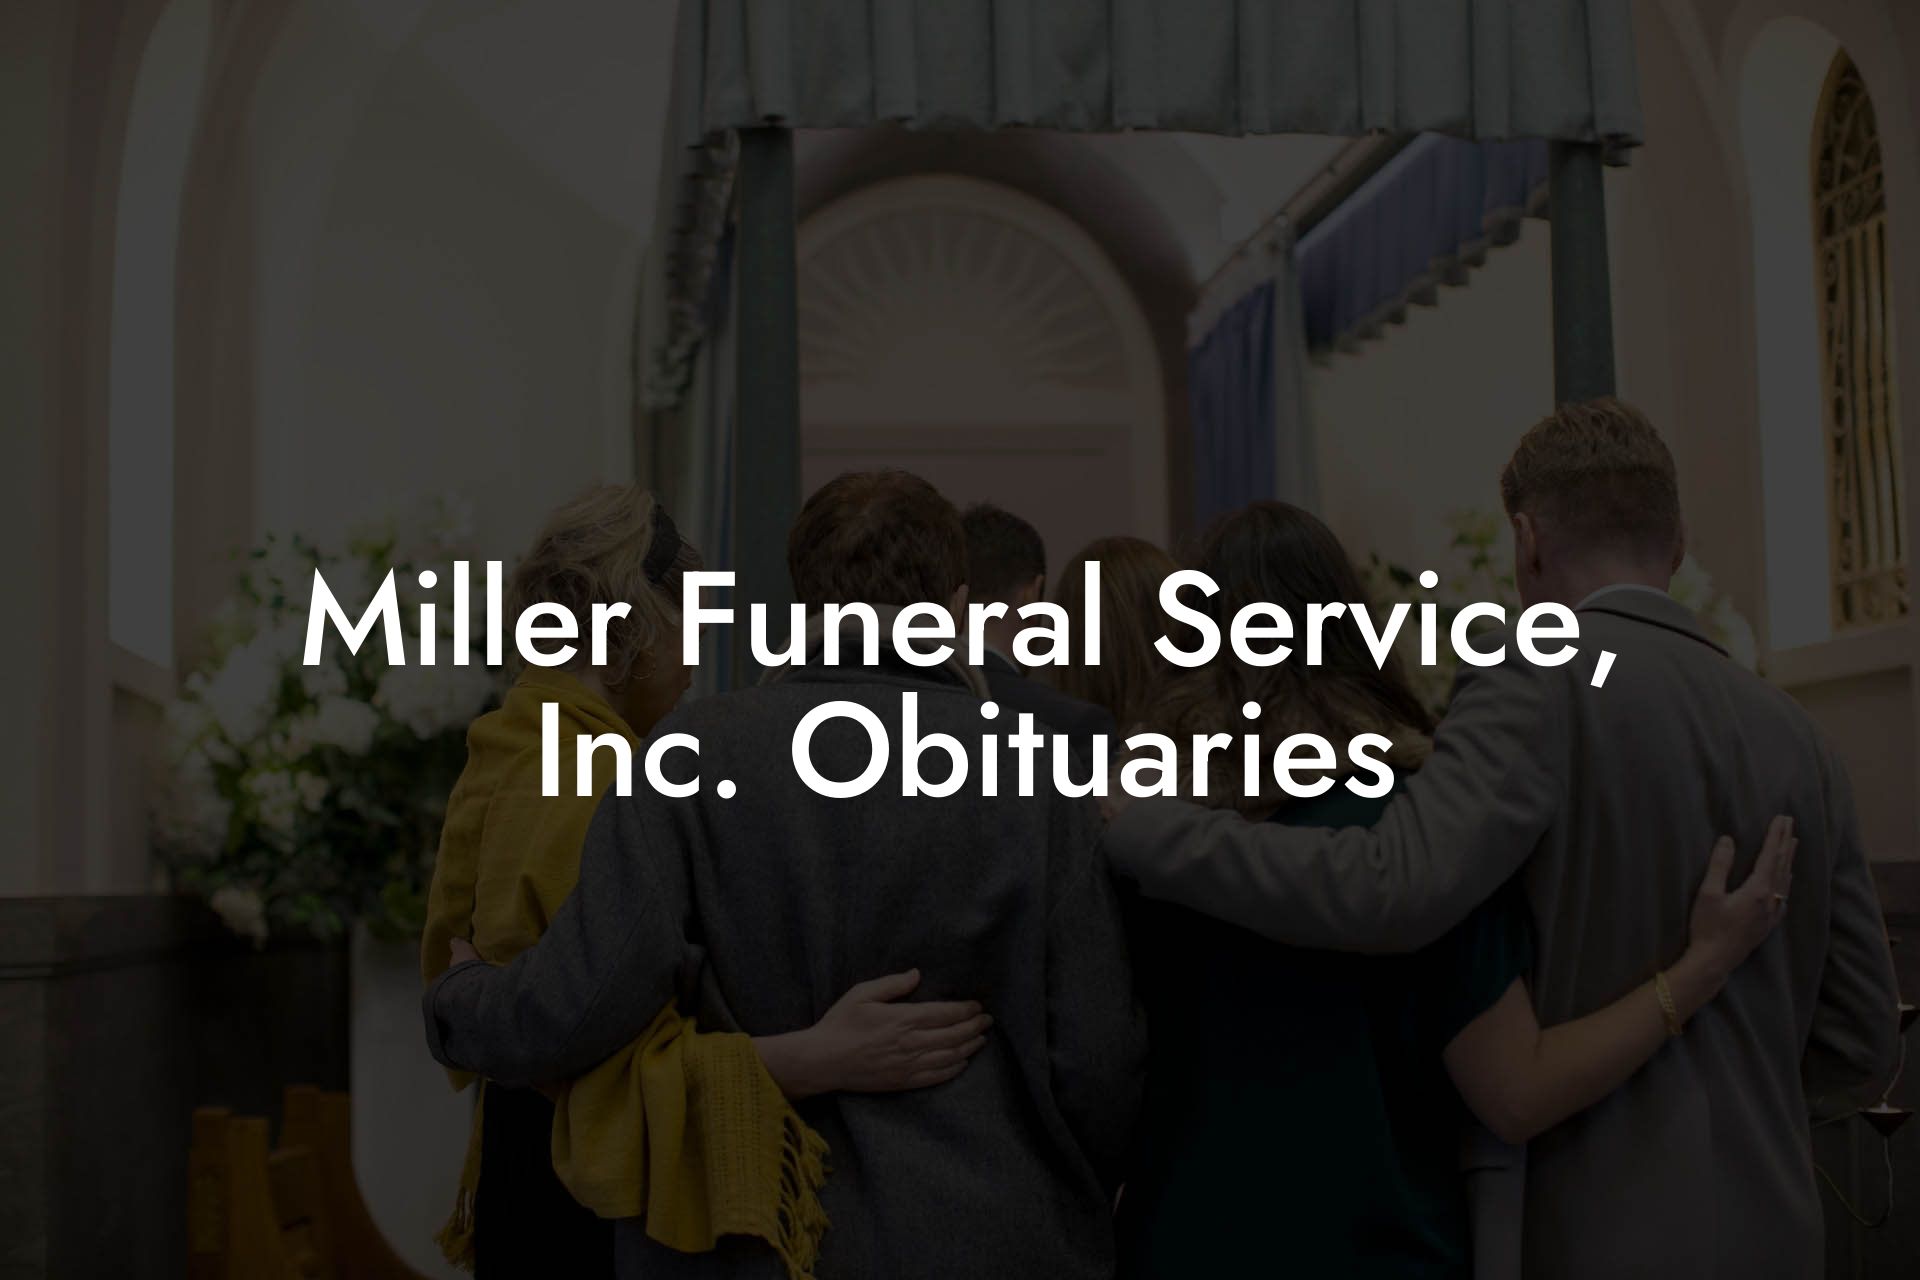 Miller Funeral Service, Inc. Obituaries